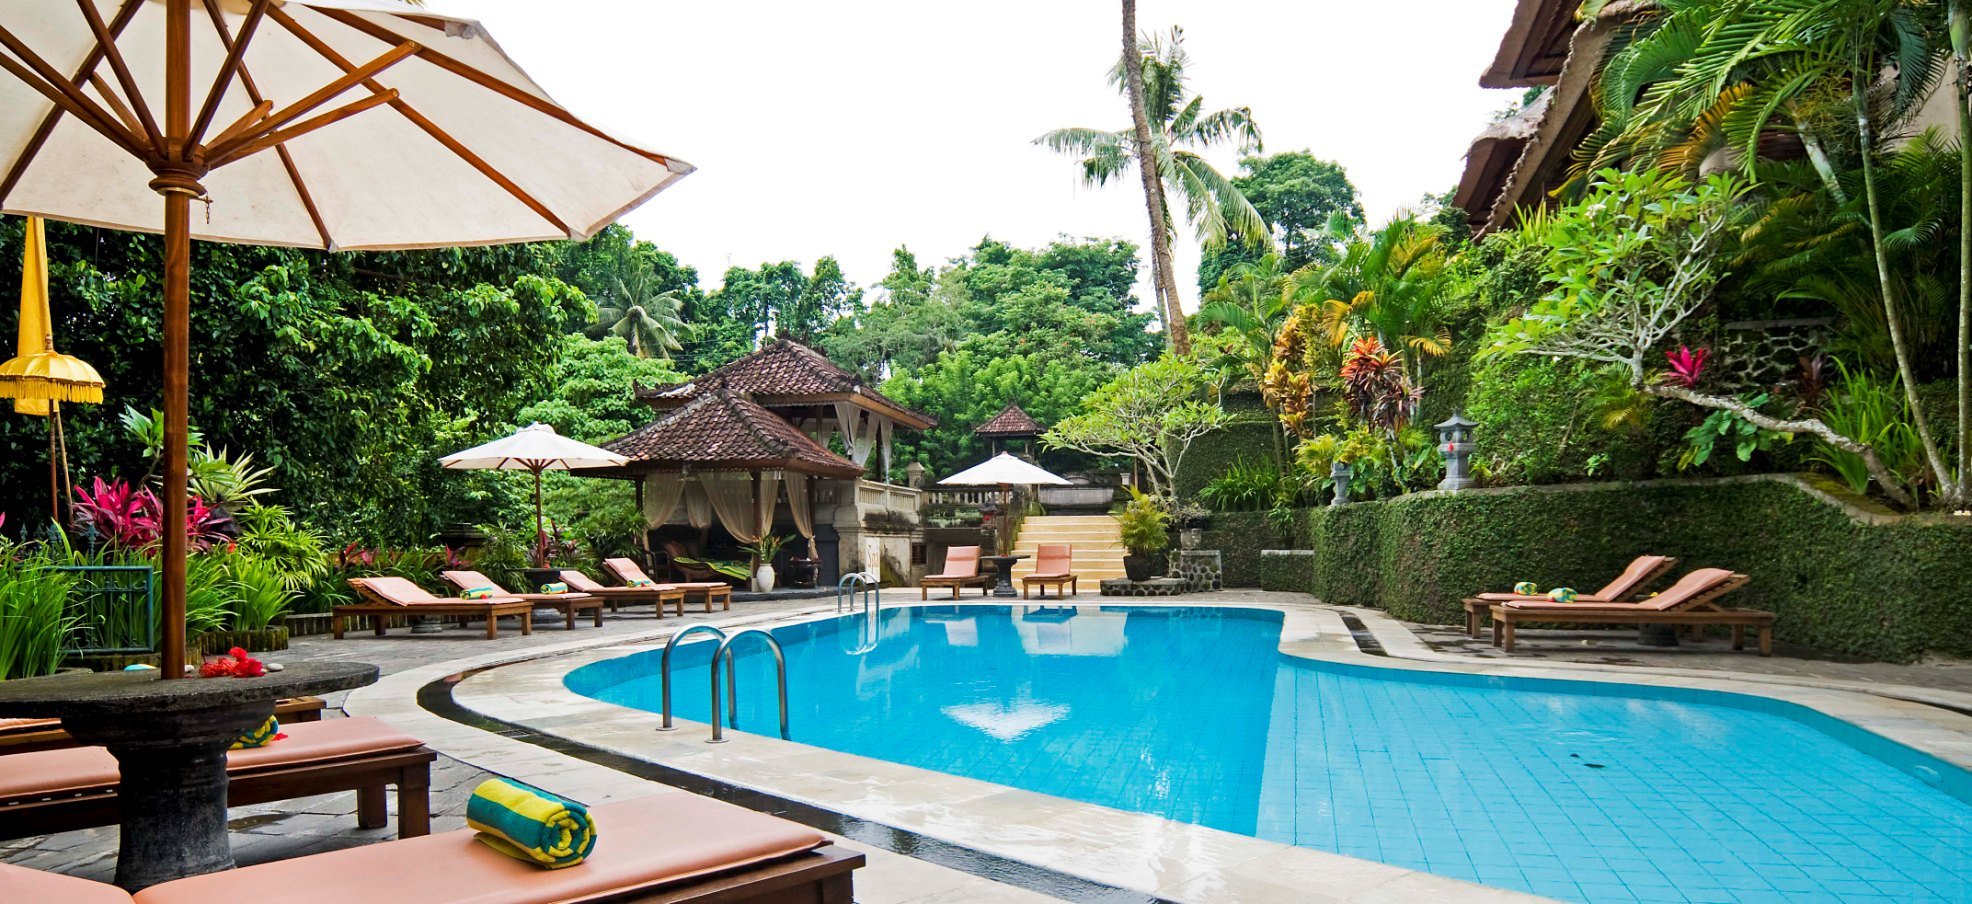 Champlung Sari Hotel - Ubud Bali